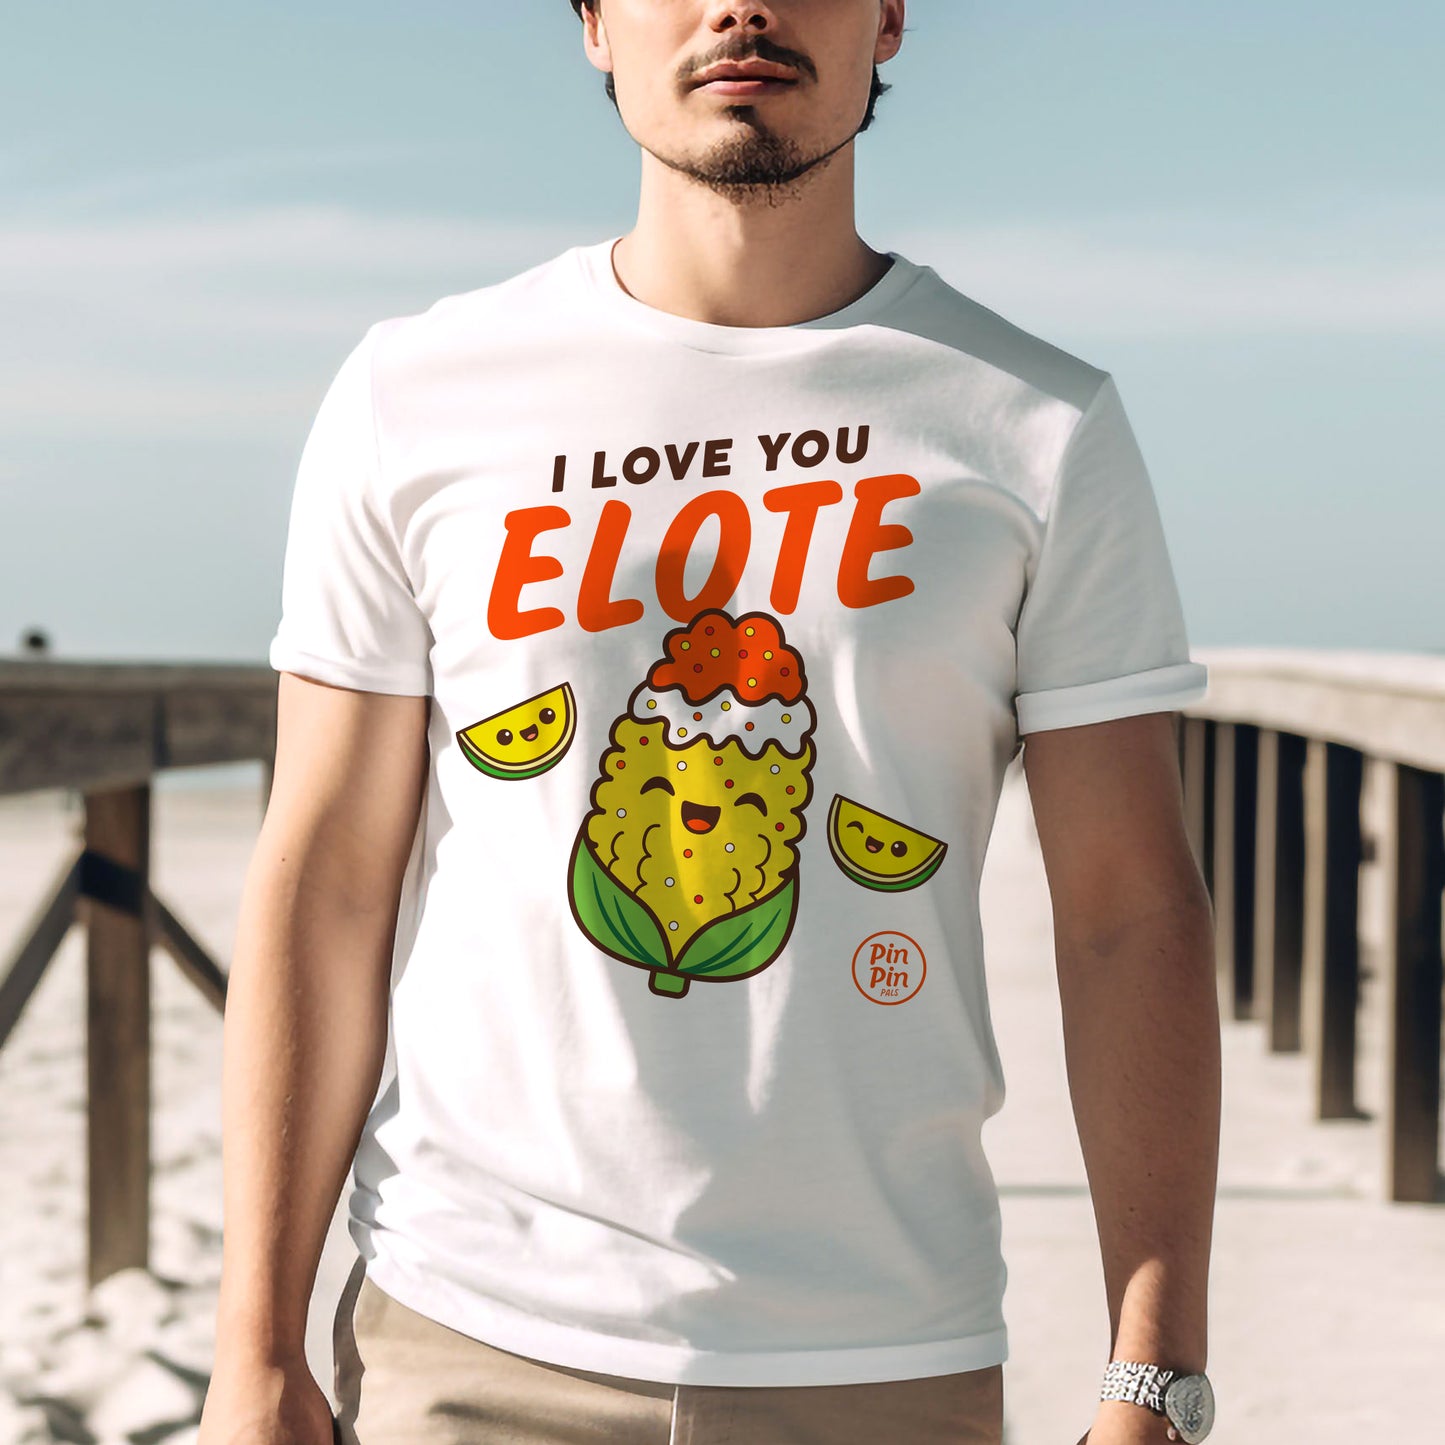 I Love You Elote - Adult Unisex T-Shirt